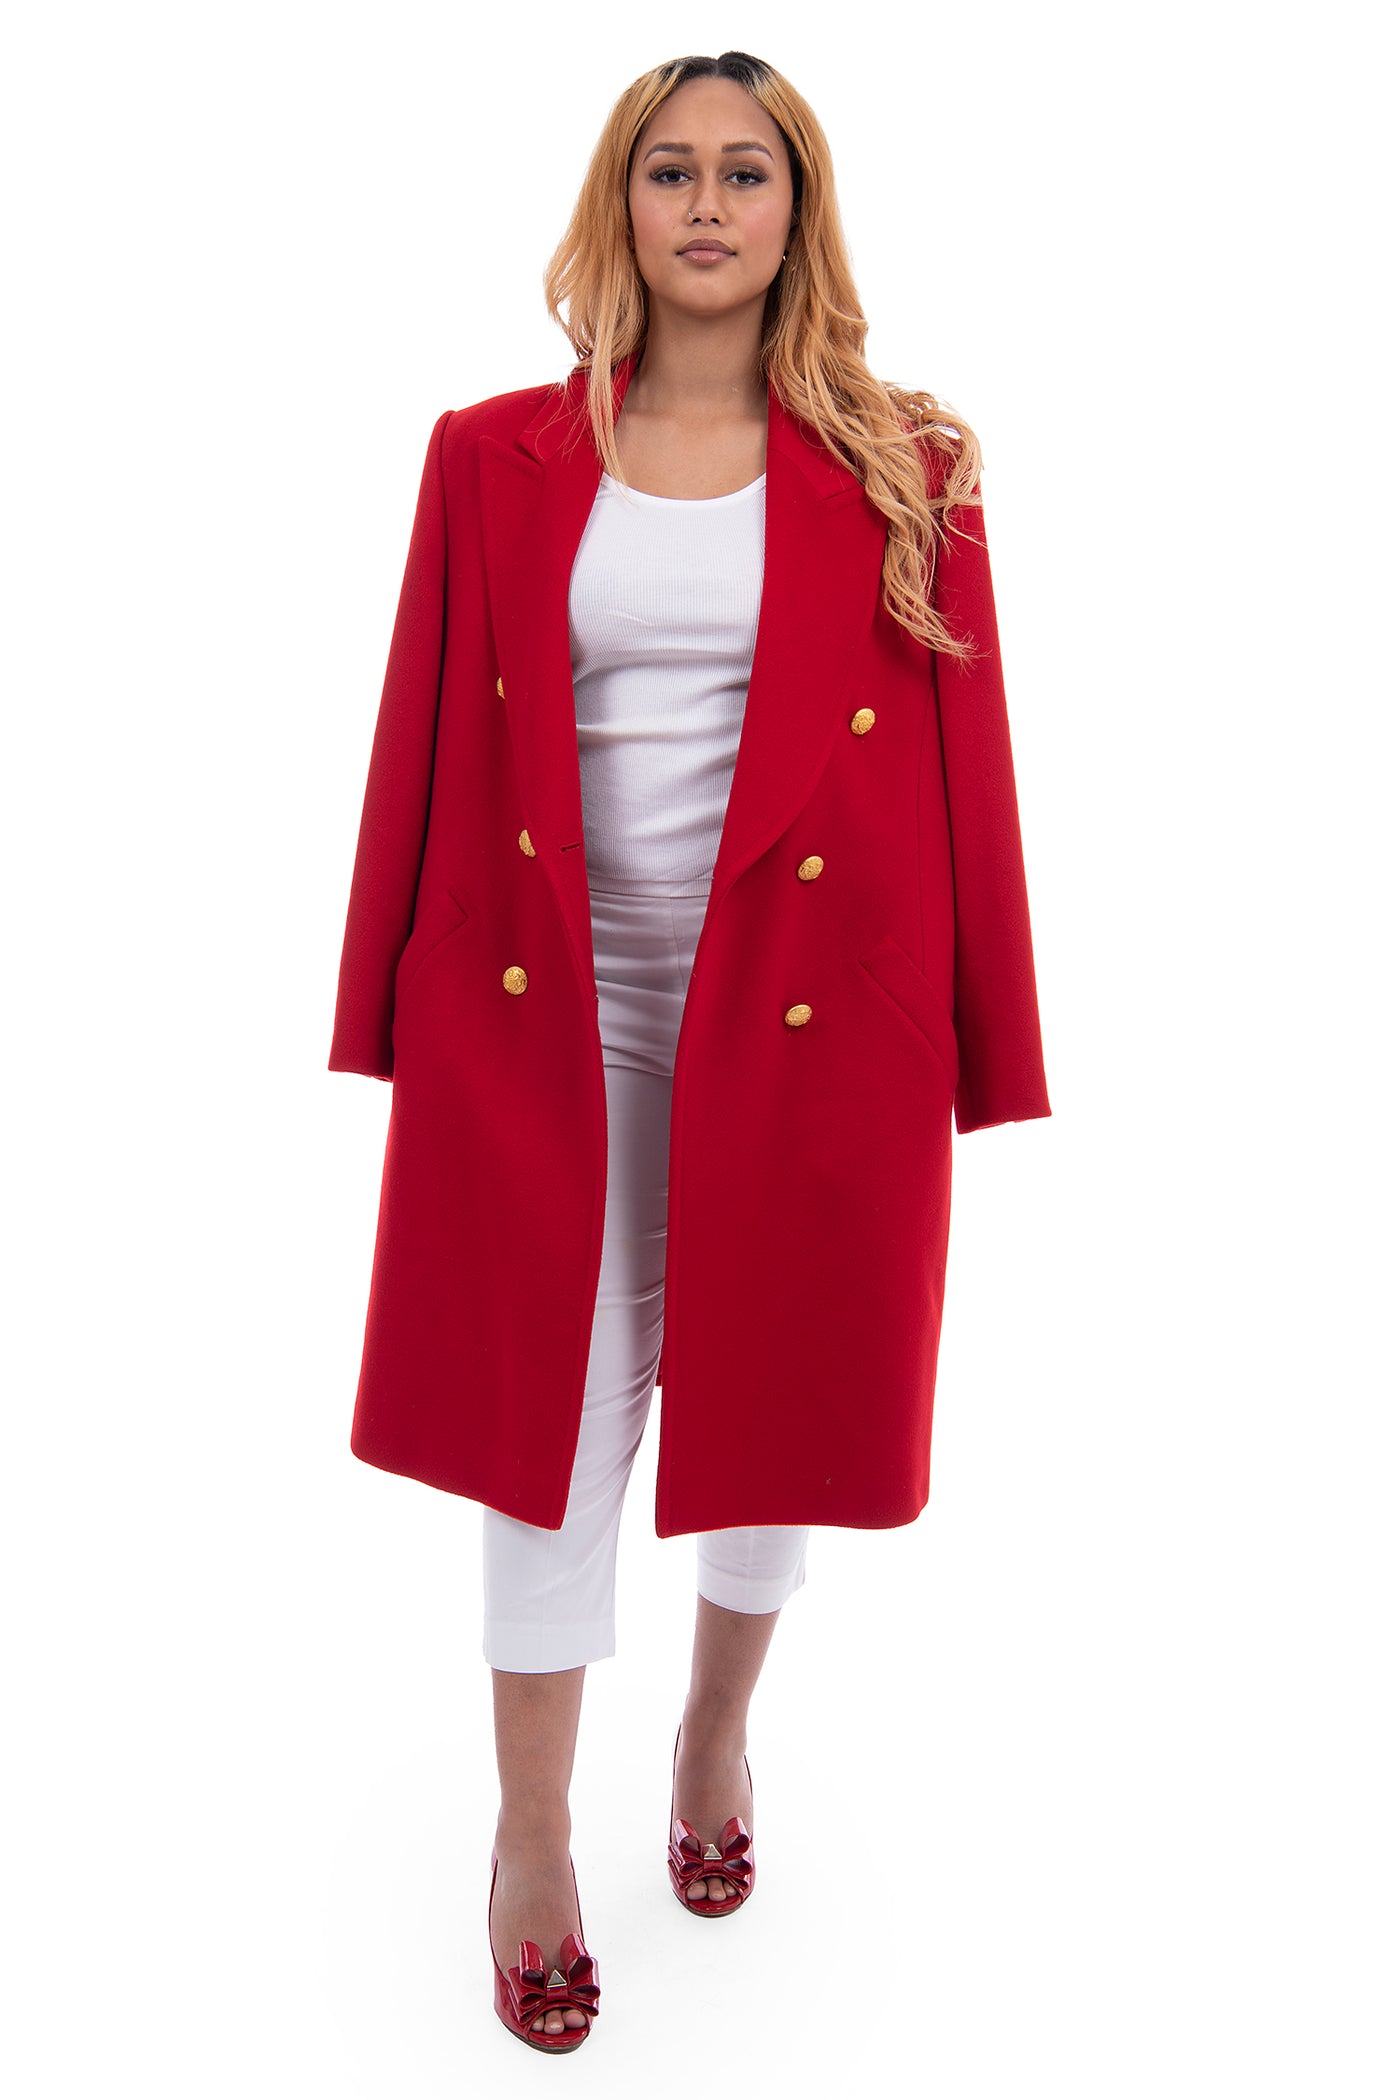 Escada Vintage, long tailored red coat, Margaretha Ley